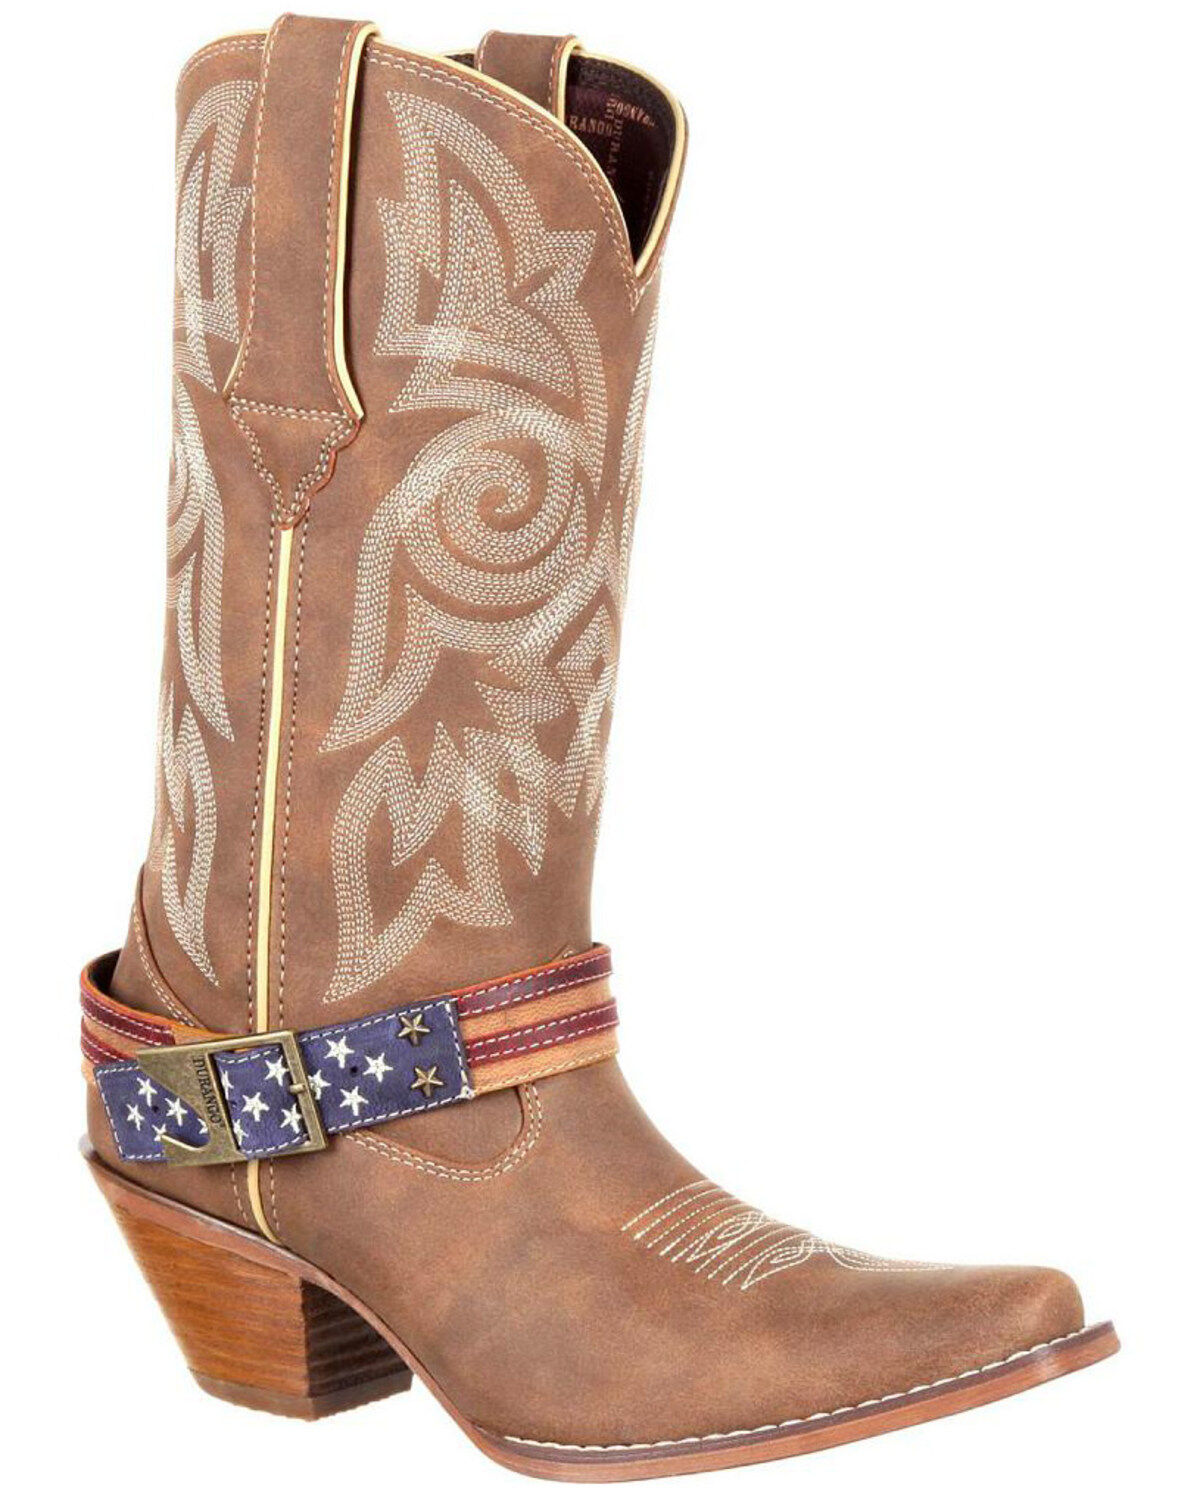 Durango Boots: Cowboy Boots, Work Boots 